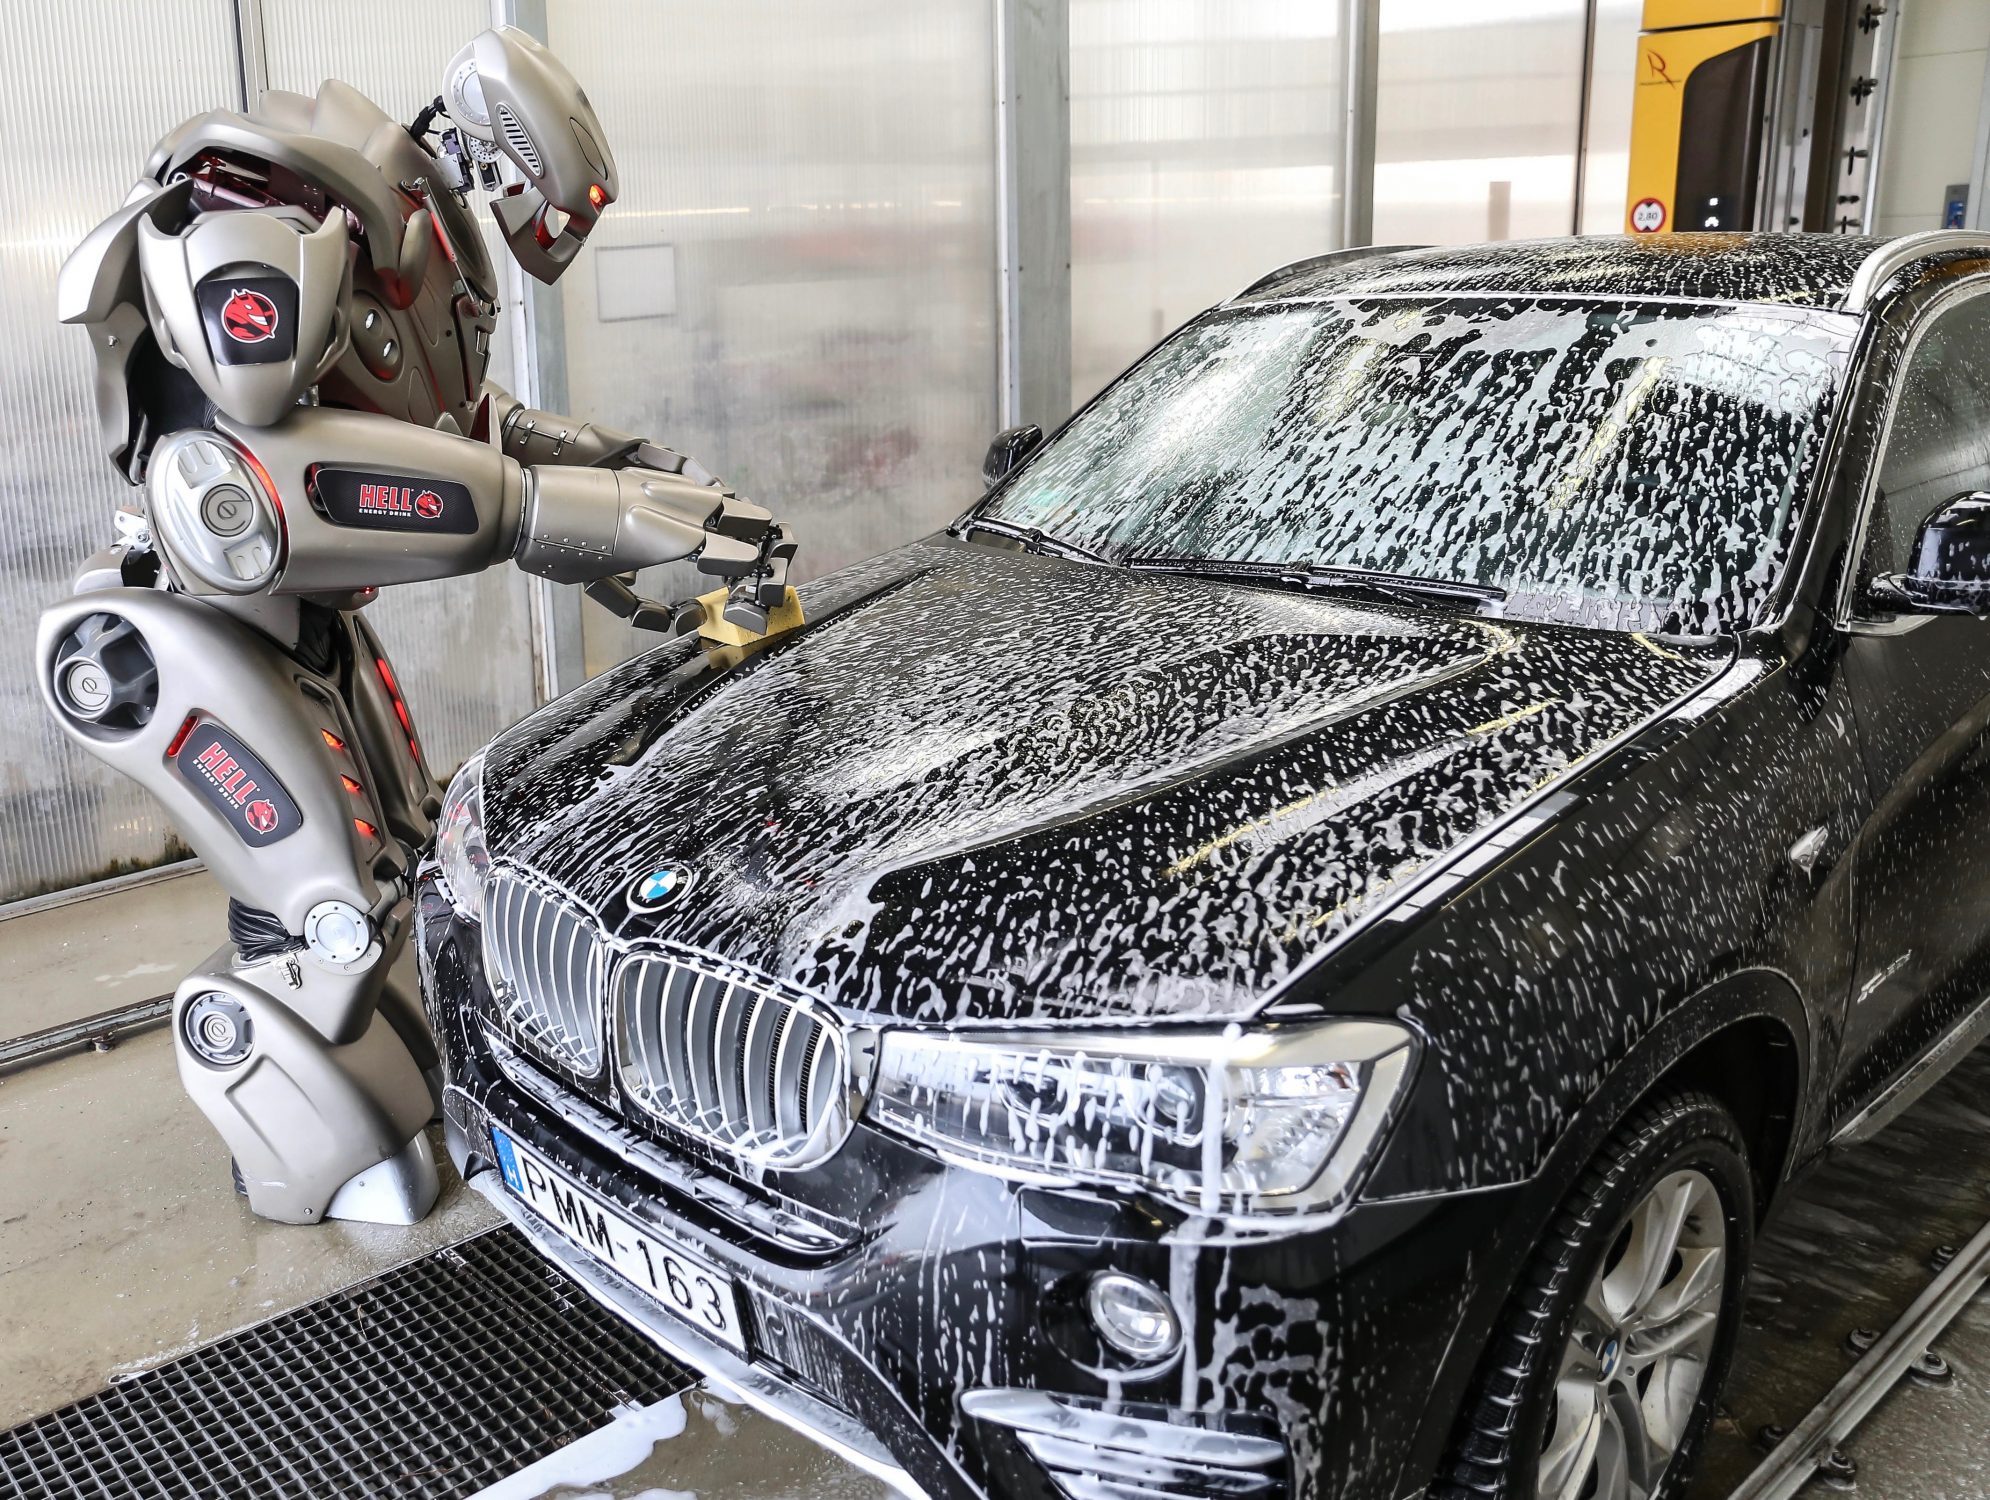 Titan the Robot randomly washing a car in Hungary